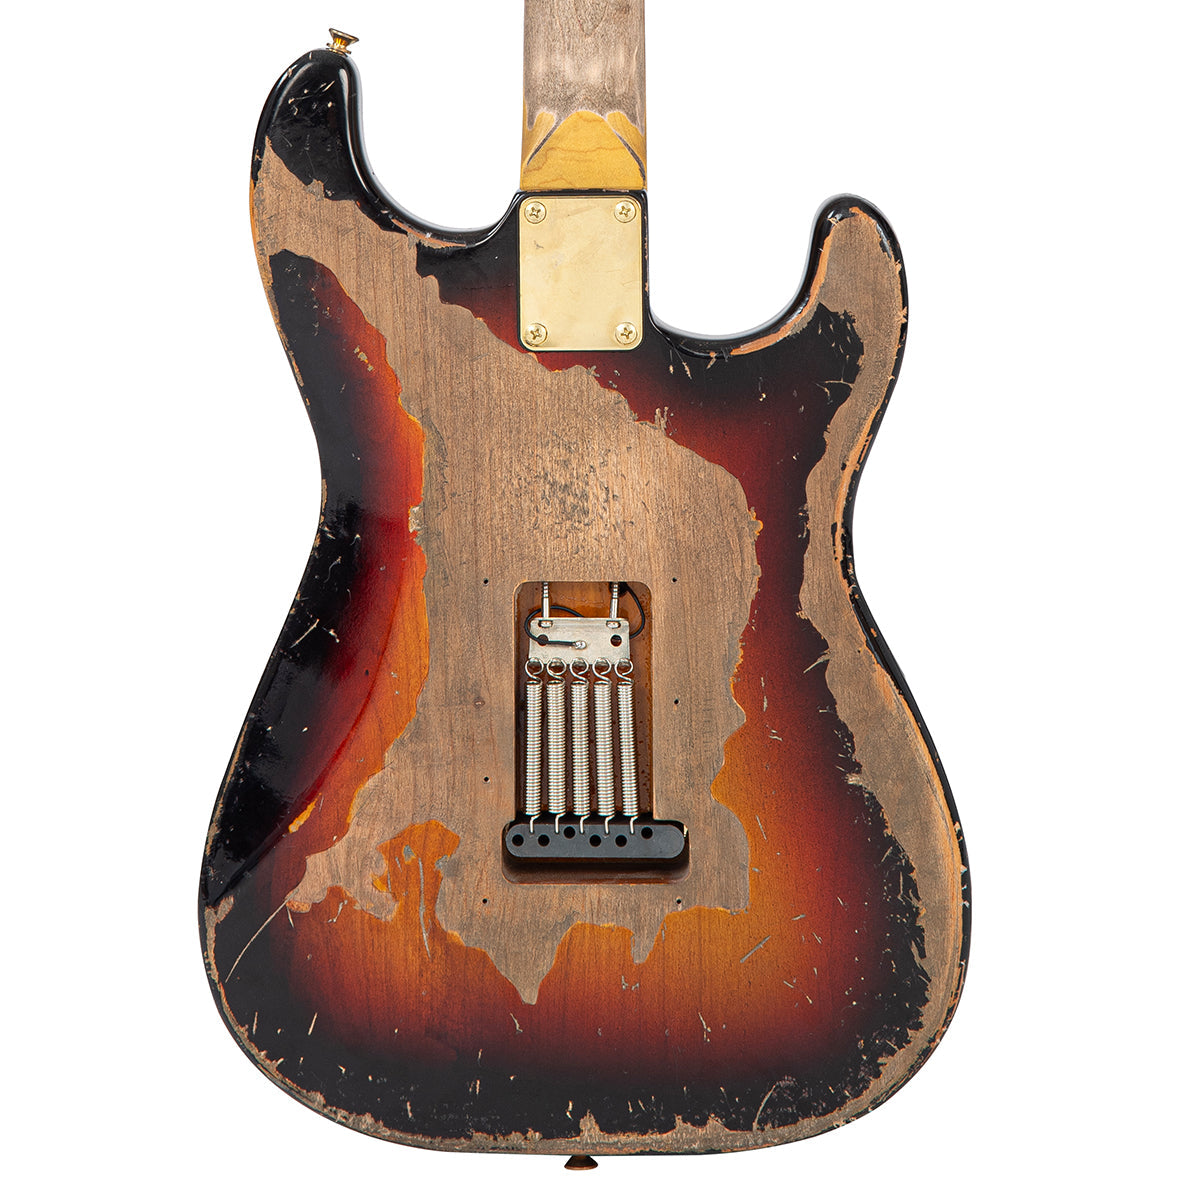 SOLD - Vintage LV6 ProShop Custom-Build ~ Heavy Distressing / SRV Style Tobacco, Electrics for sale at Richards Guitars.